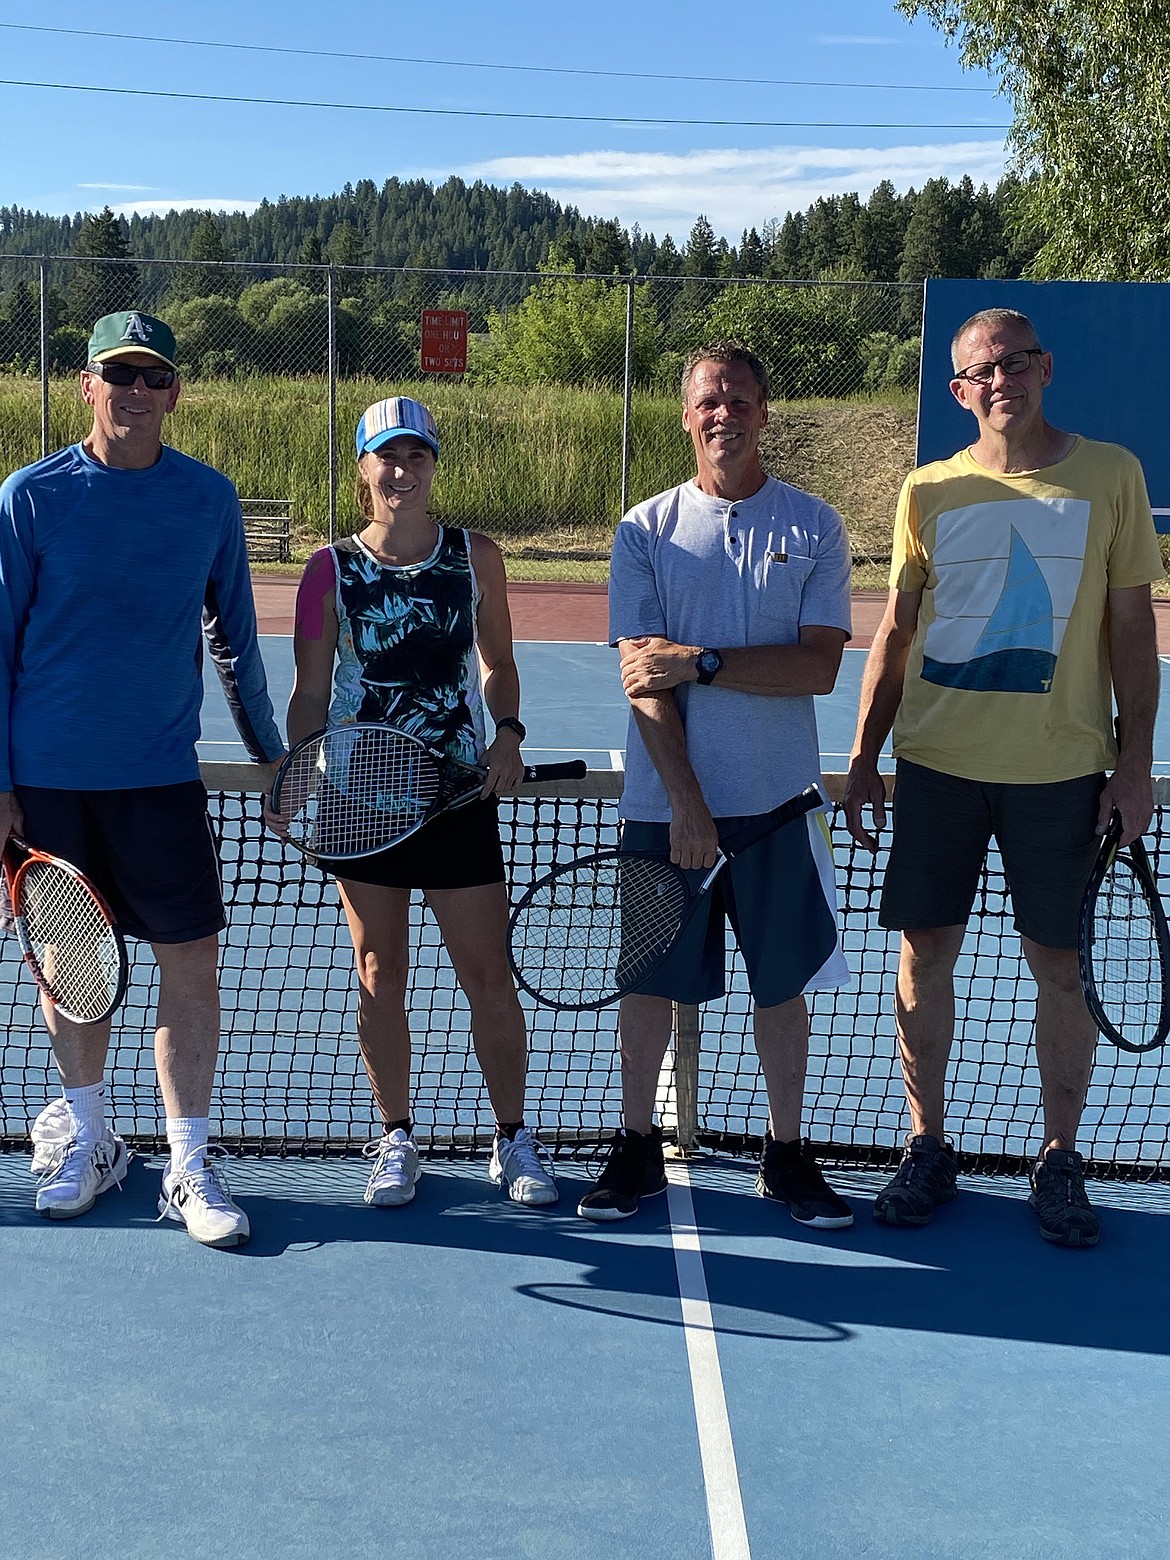 Boundary County Tennis Association singles championship semifinalists John Beck, Cynthia Franke, Scott Fontenot and Francis Danielek pose for a photo.